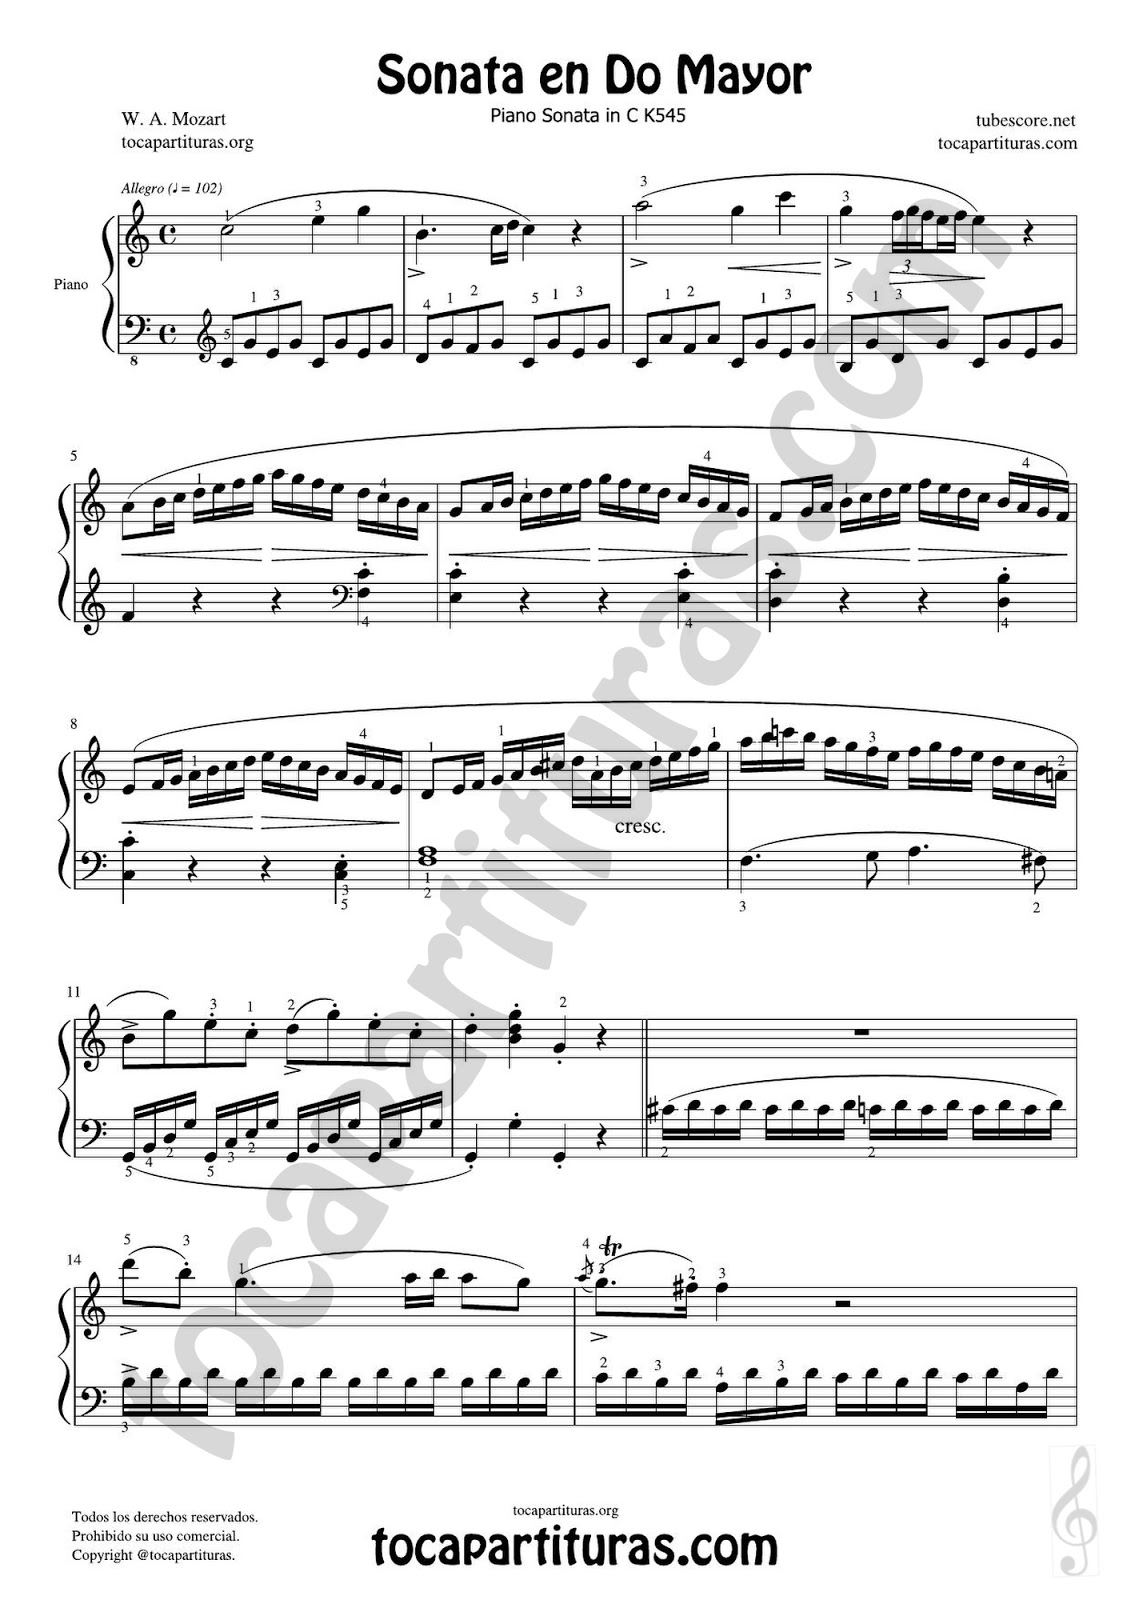 tubescore: Piano Sonata Nº 16 K545 in C Major by Wolfang Amadeus Mozart